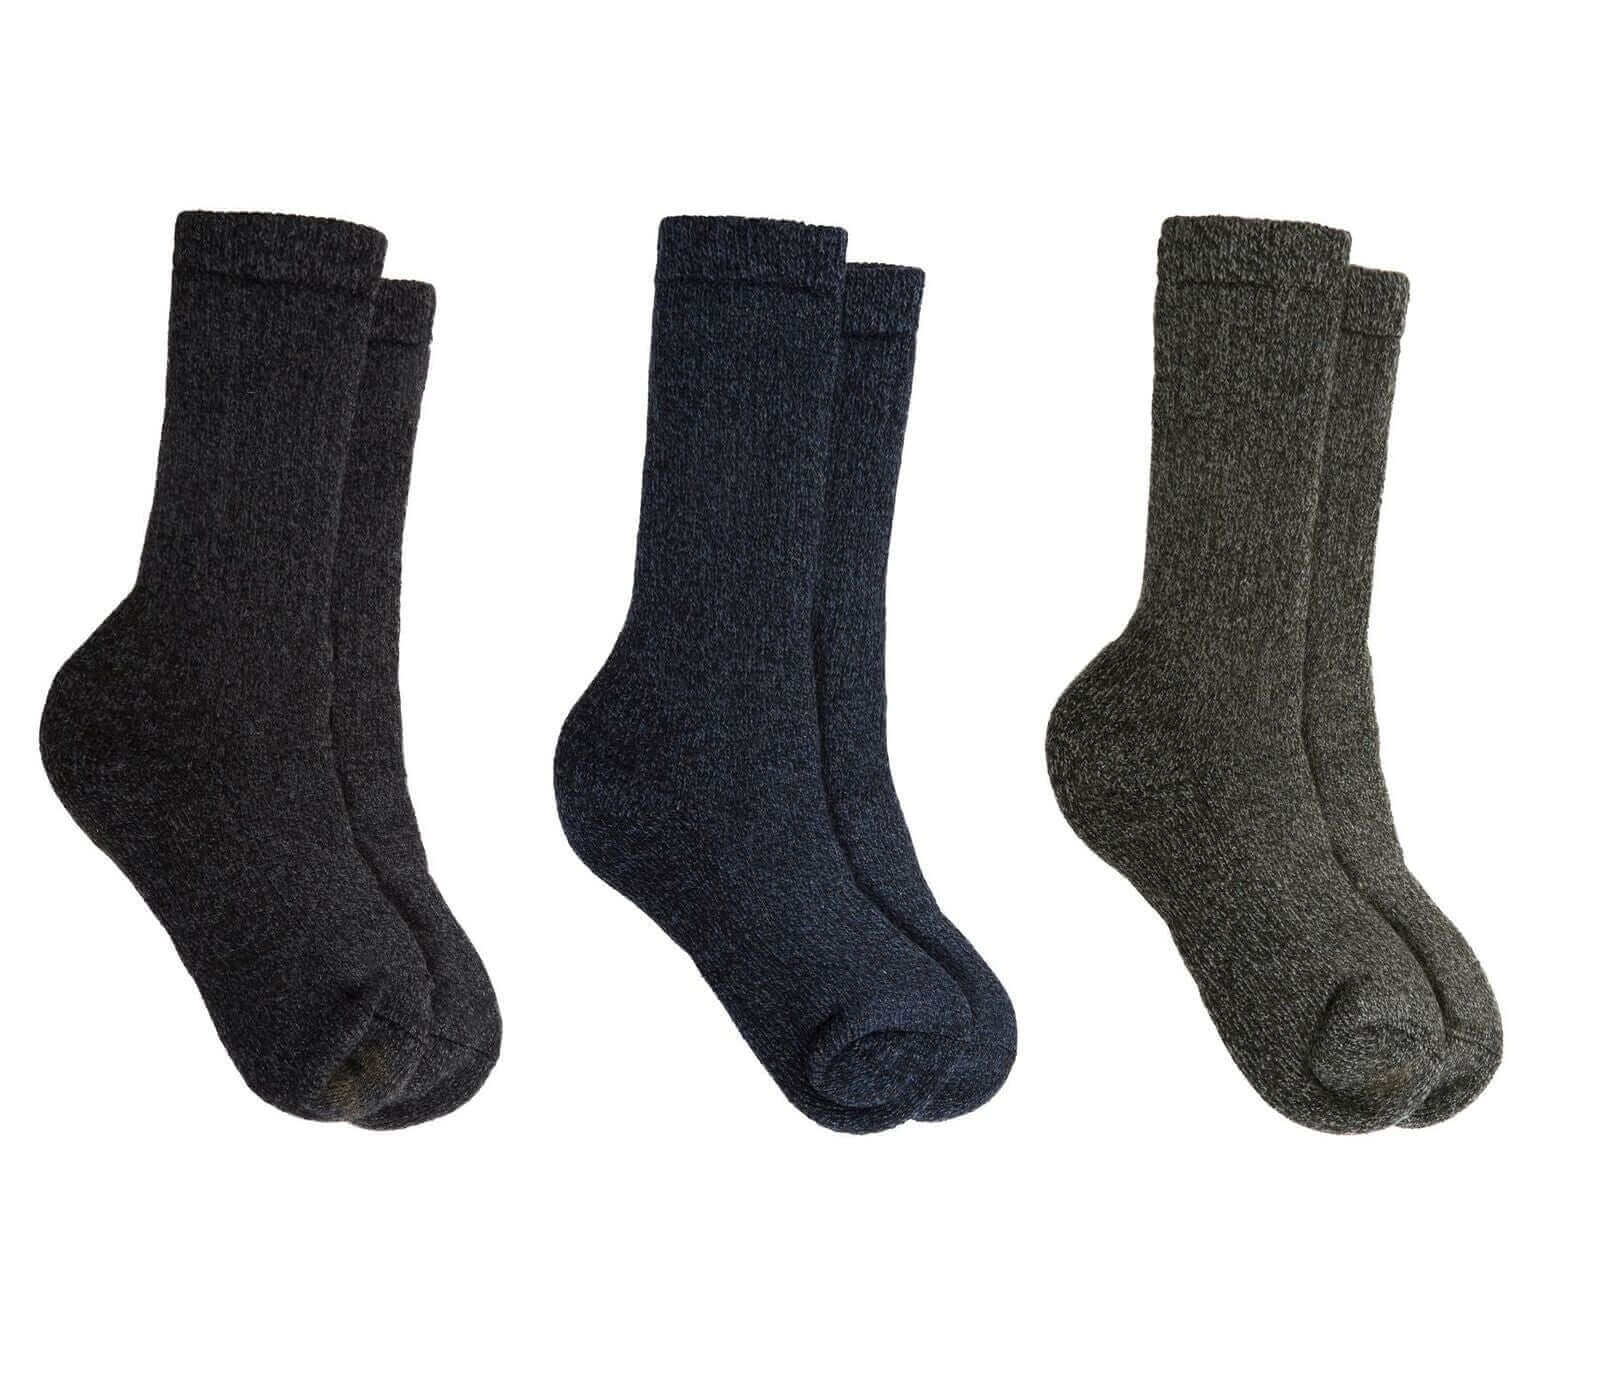 3 Pairs of Men's Merino Wool Socks, Pro Thermal Walking Hiking Work Boot Socks. Buy now for £13.00. A Socks by Sock Stack. 6-11, acrylic, athletics, black, boot, bottom, camo, casual, comfortable, cosy, dressing, elastane, gym, hike, hiking, long socks, m